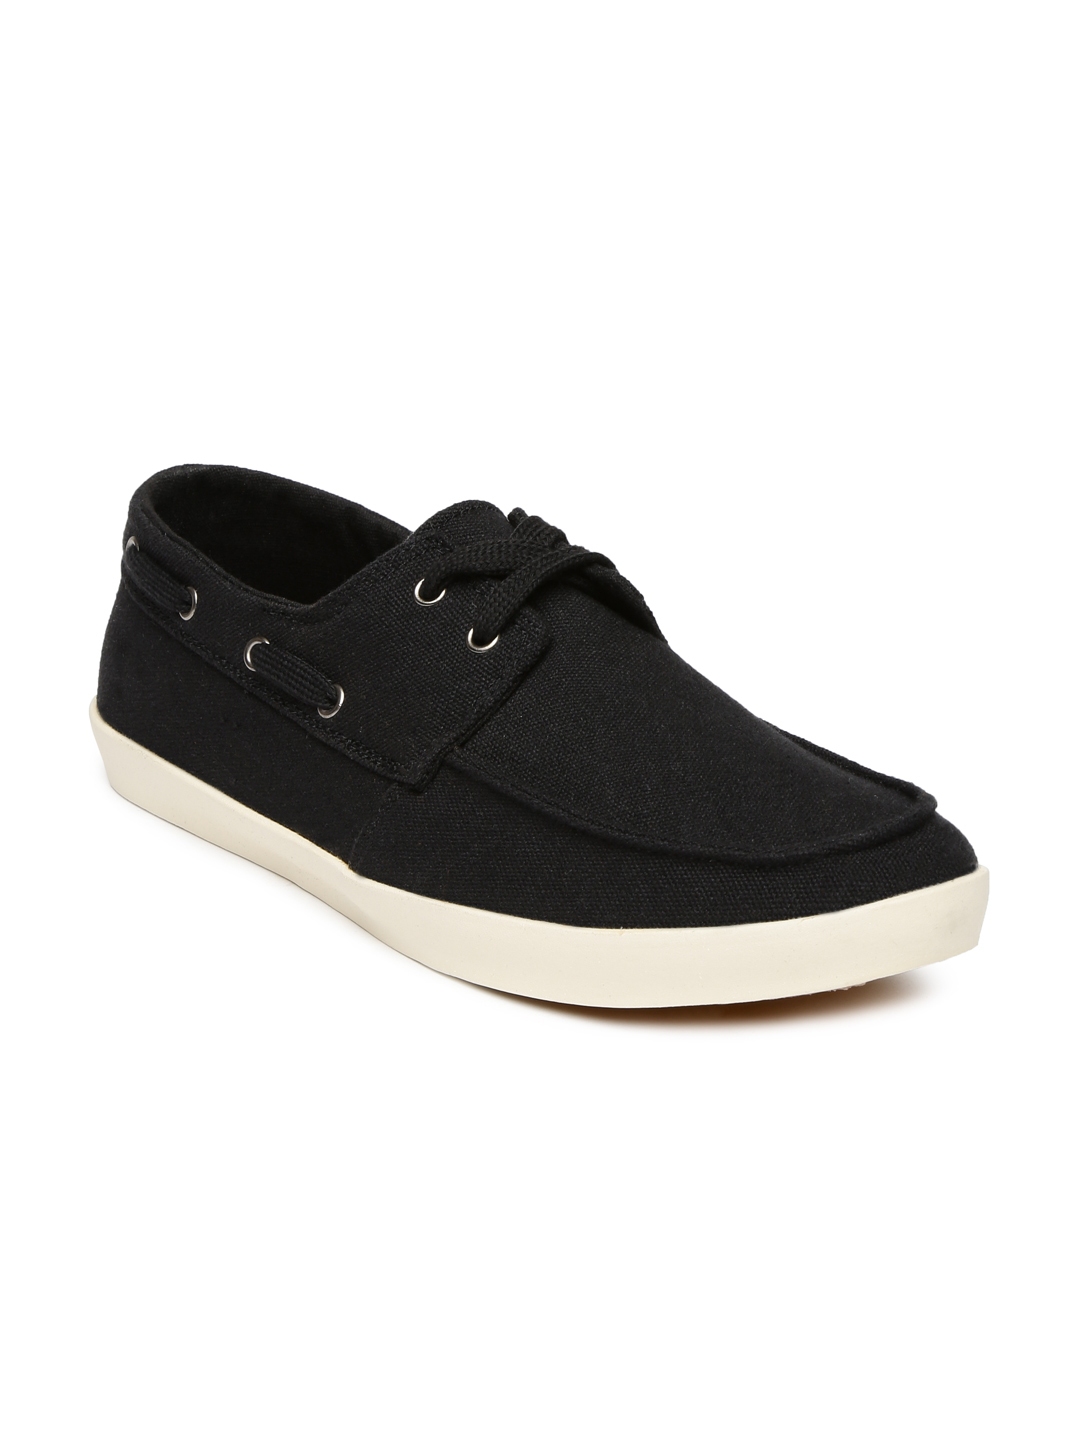 Buy Boltio Men Black Boat Shoes - Casual Shoes for Men 1250352 | Myntra